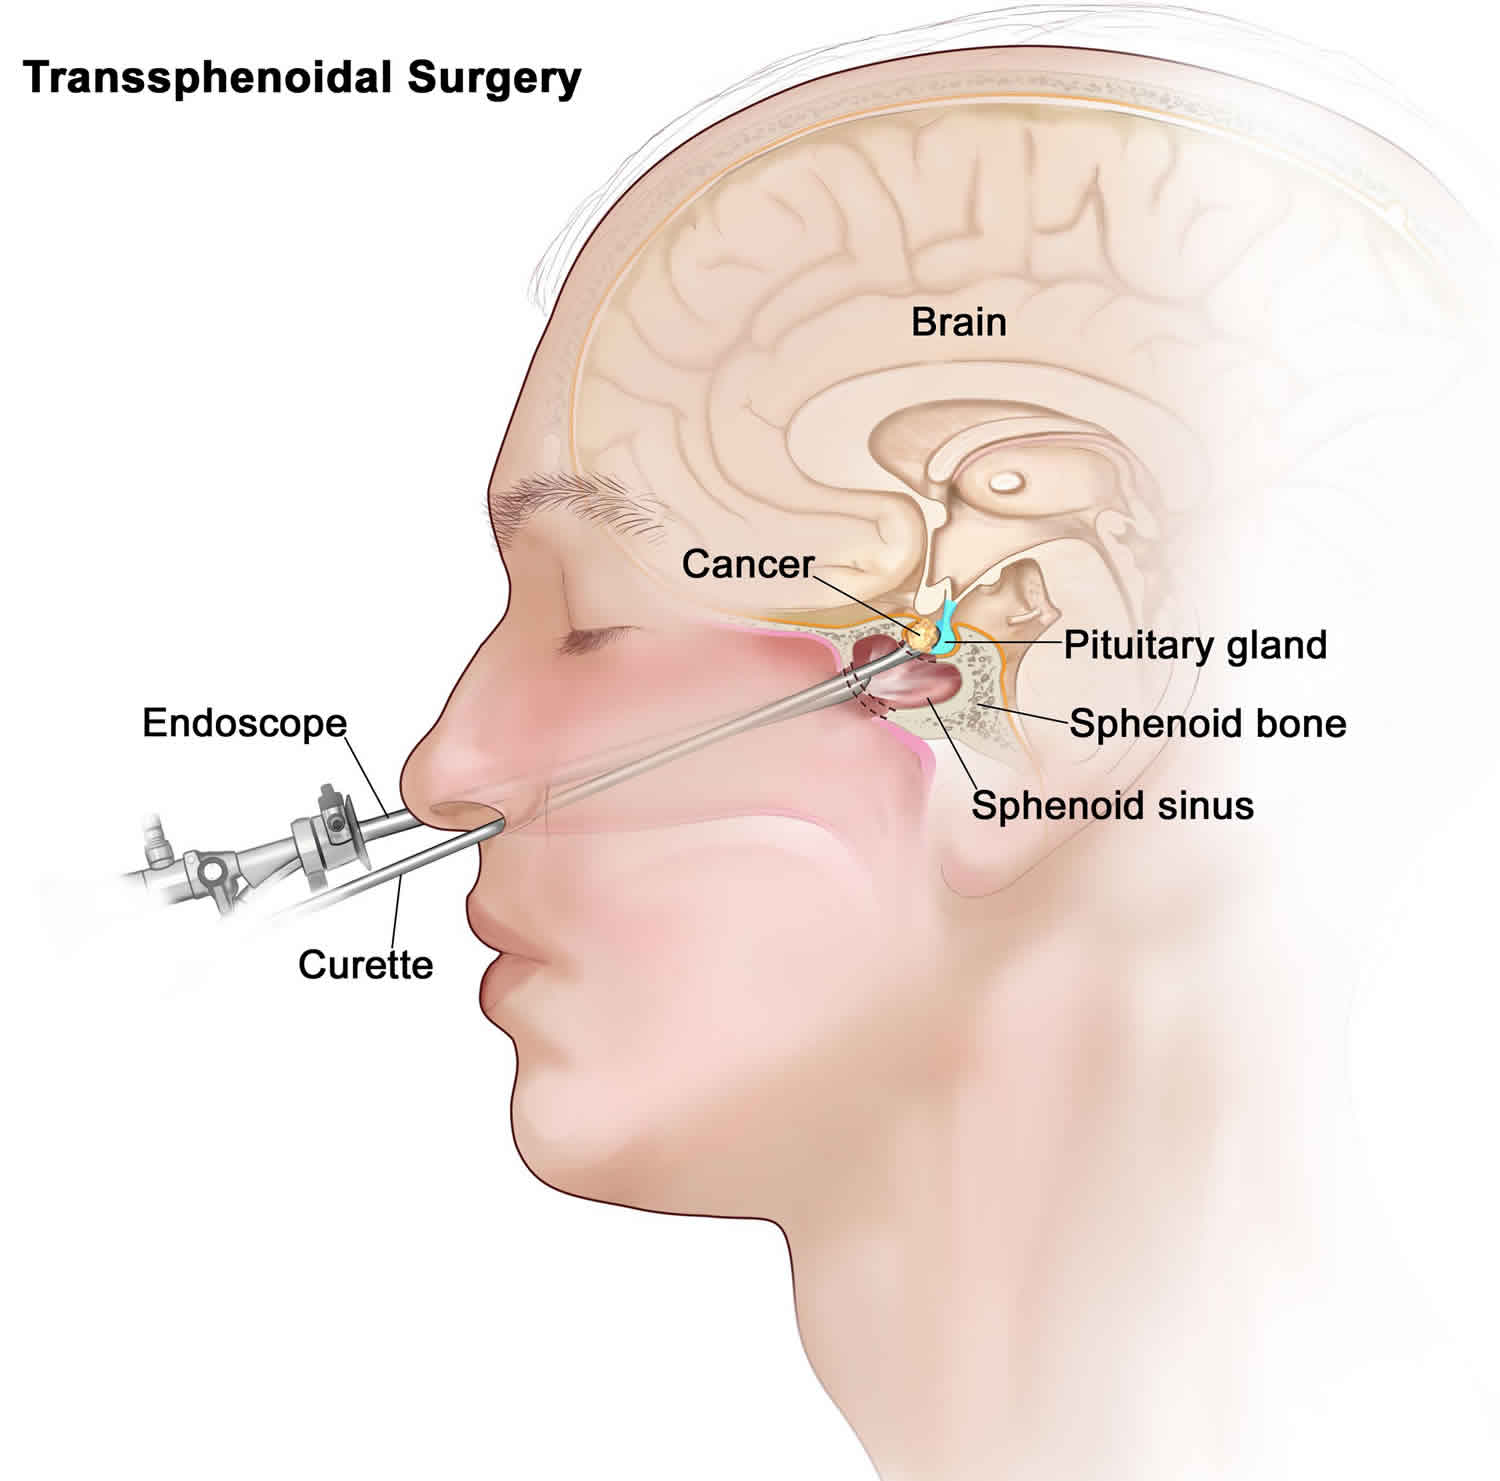 Transsphenoidal surgery